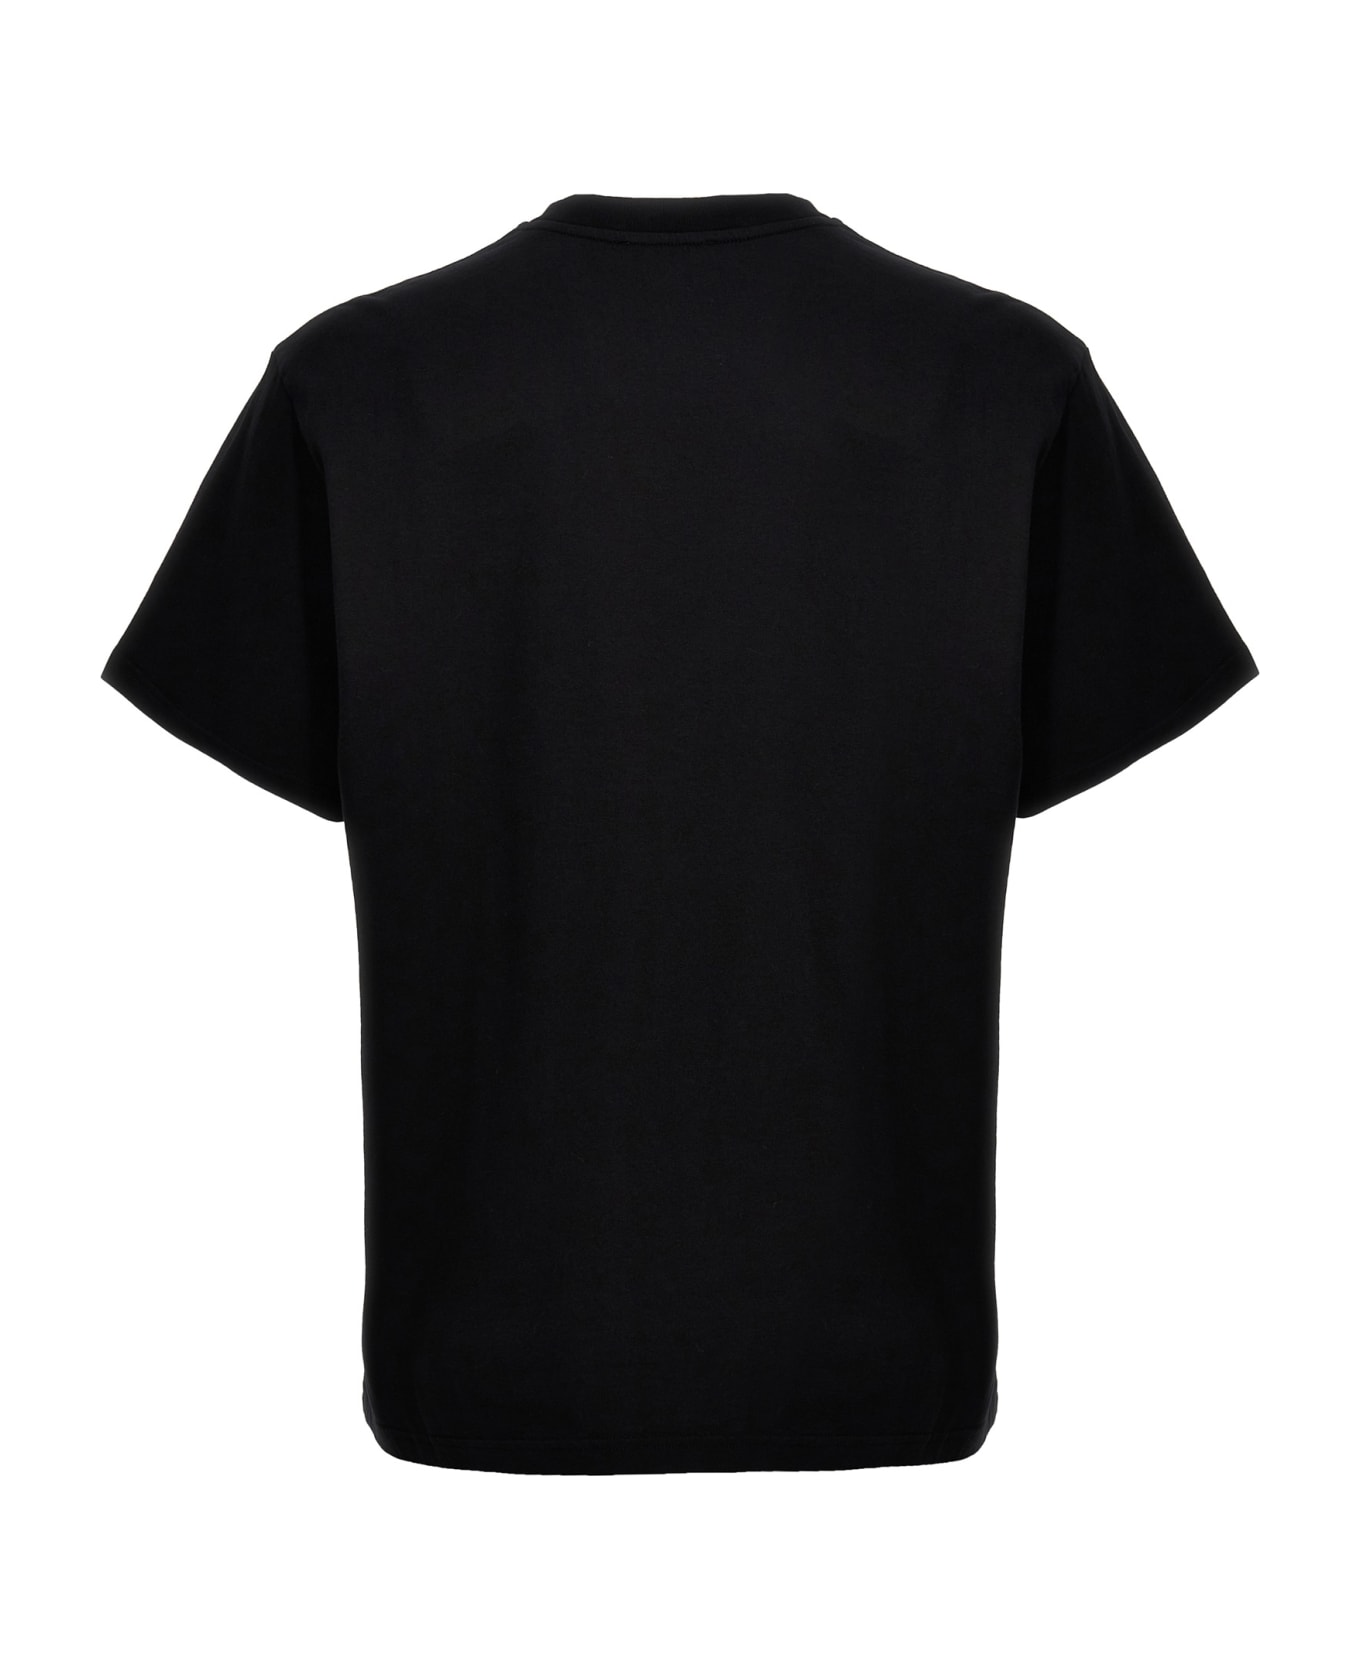 J.W. Anderson 'gnome Trio' T-shirt - Black   シャツ